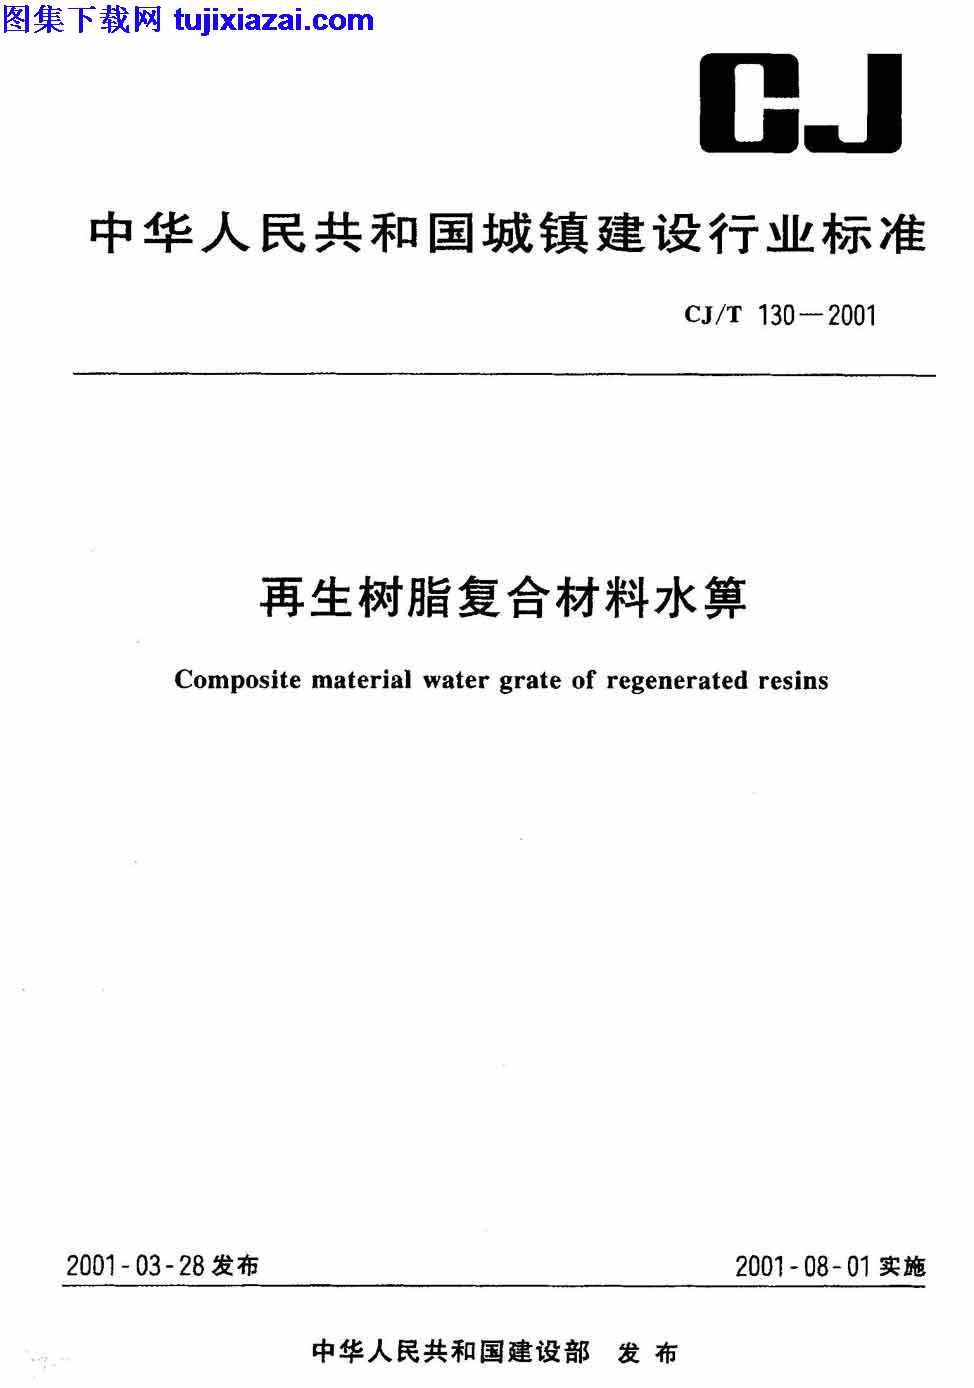 CJT130-2001,再生树脂复合材料水箅,再生树脂复合材料水箅_市政规范,市政规范,CJT130-2001_再生树脂复合材料水箅_市政规范.pdf